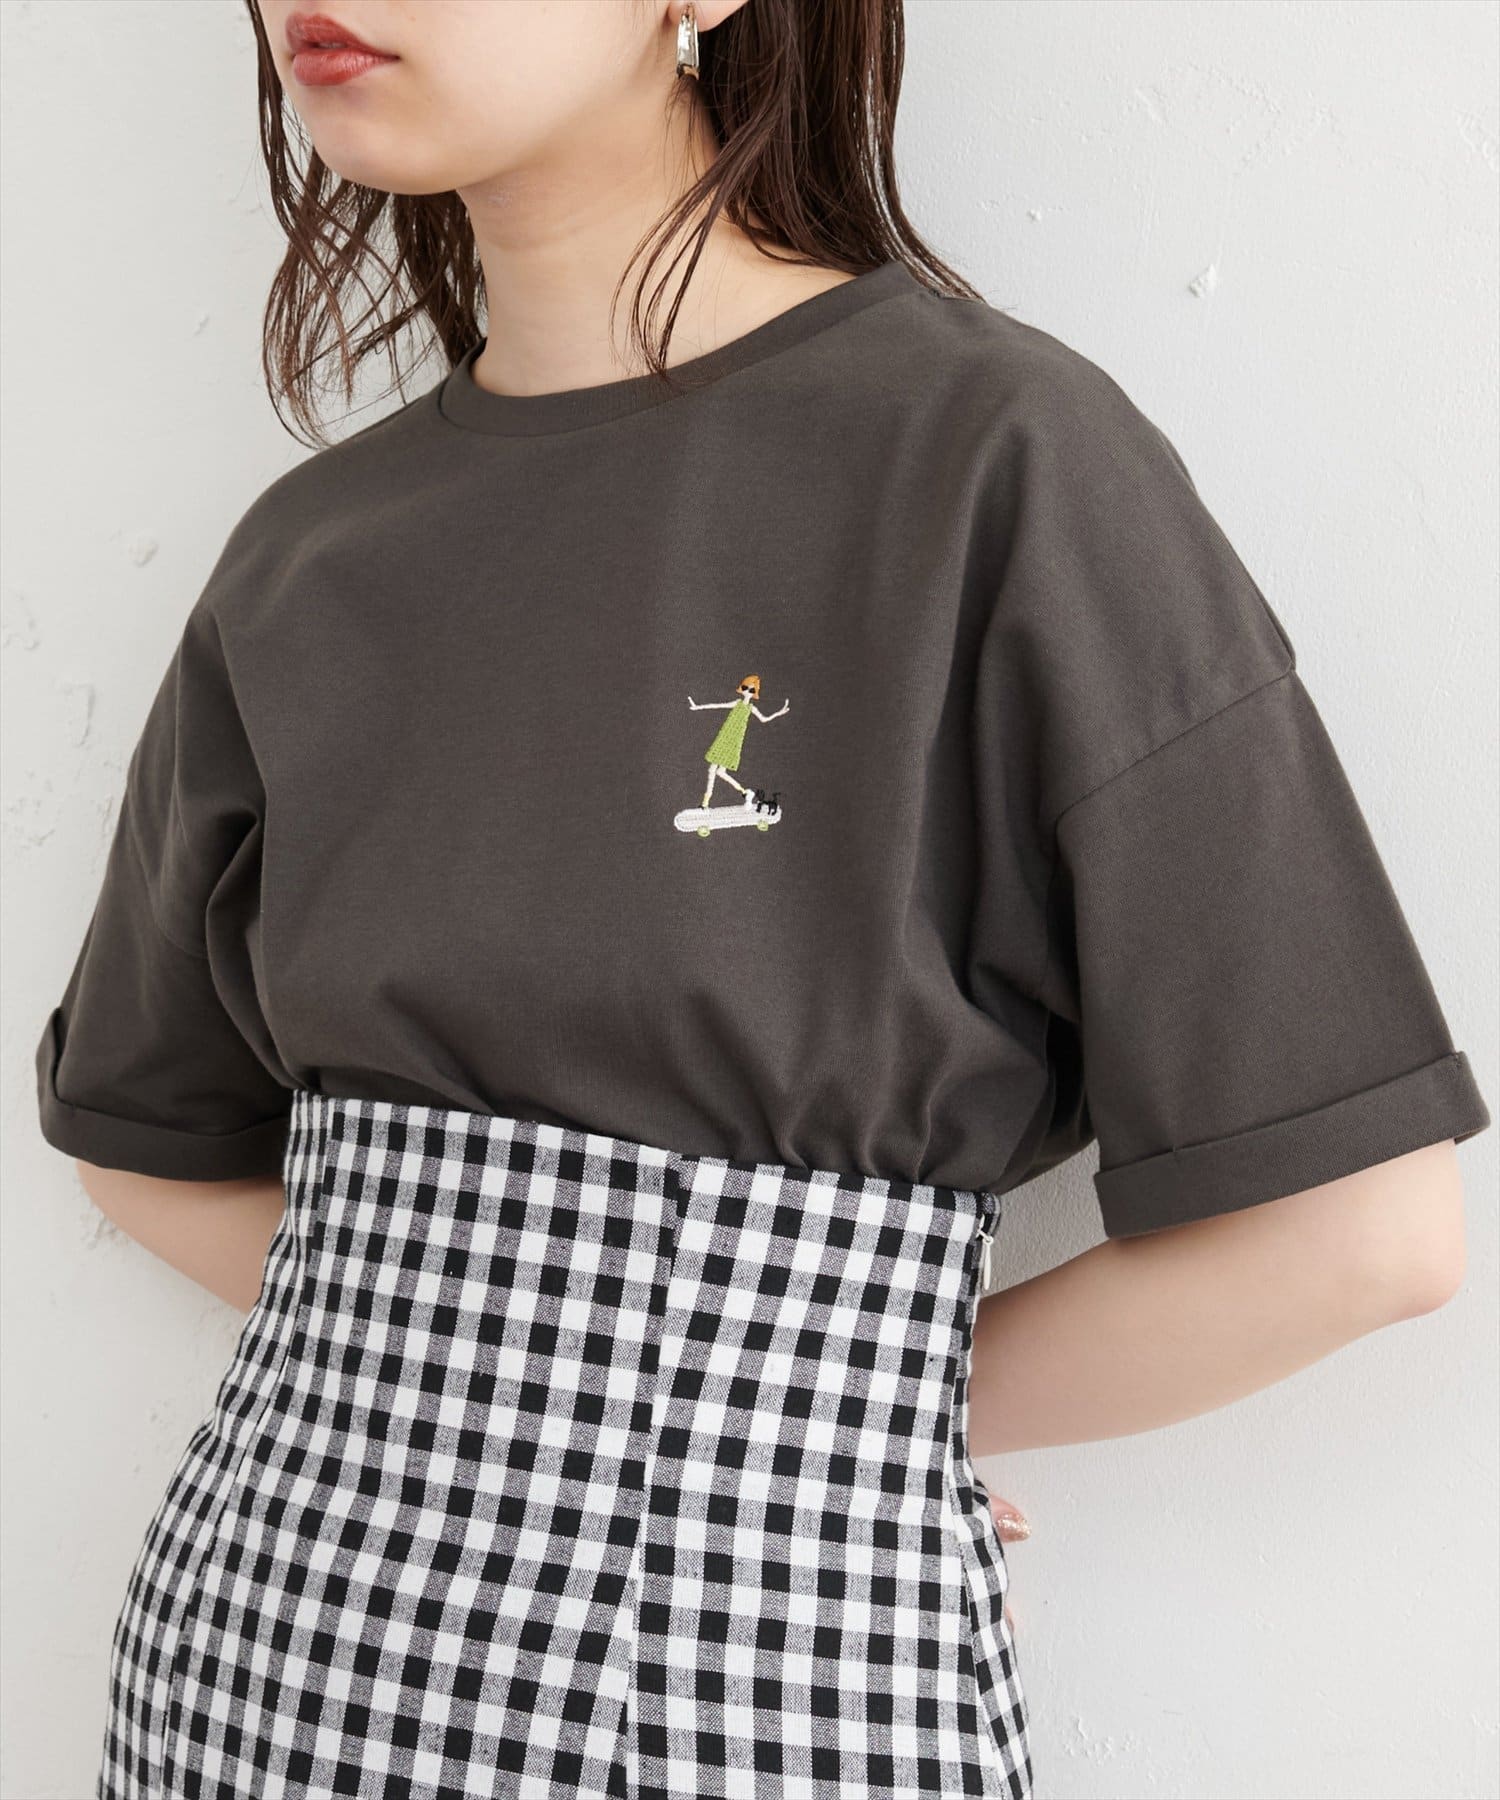 natural couture(ナチュラルクチュール) New女の子刺繍Tシャツ